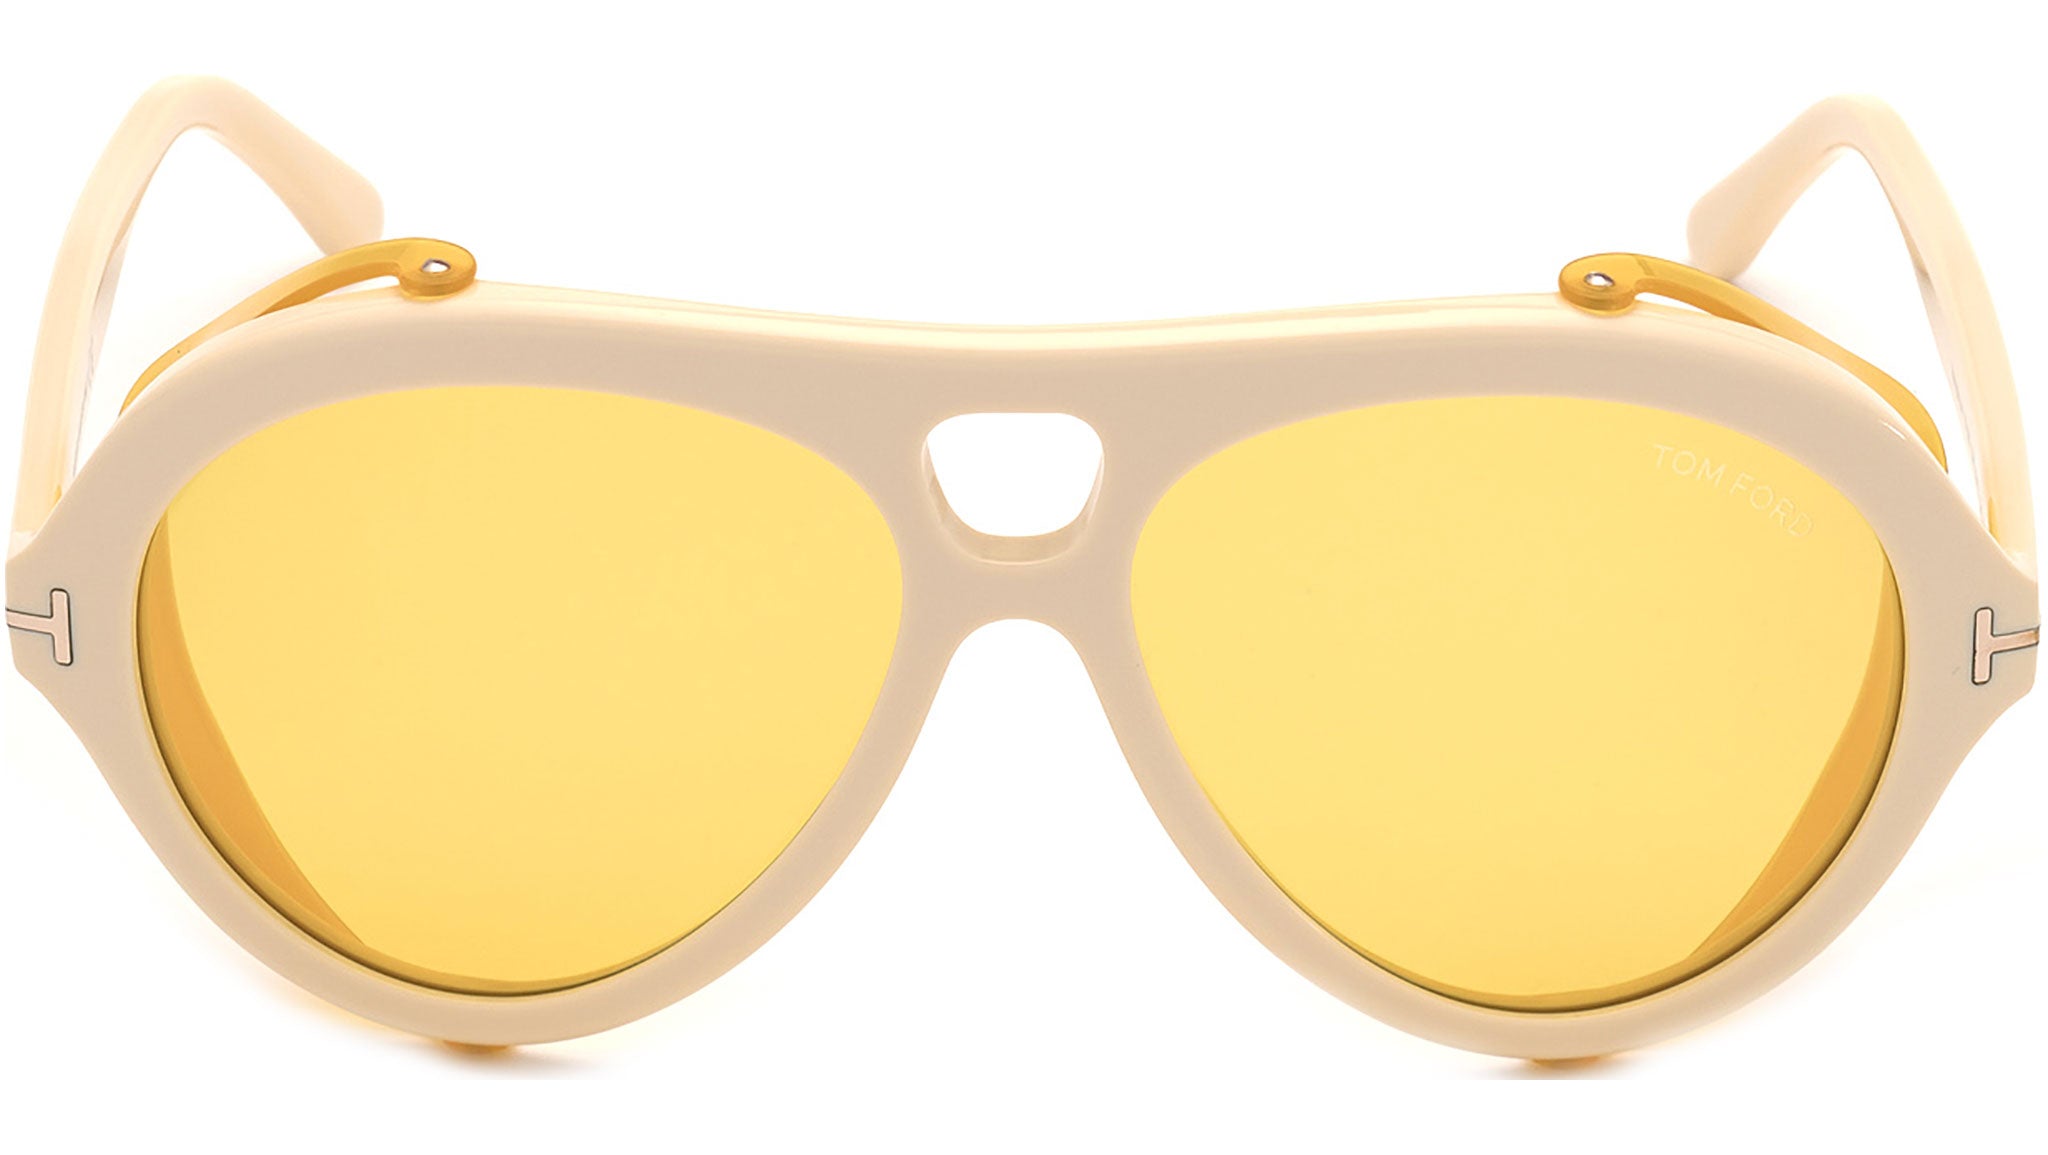 Neughman round-frame sunglasses